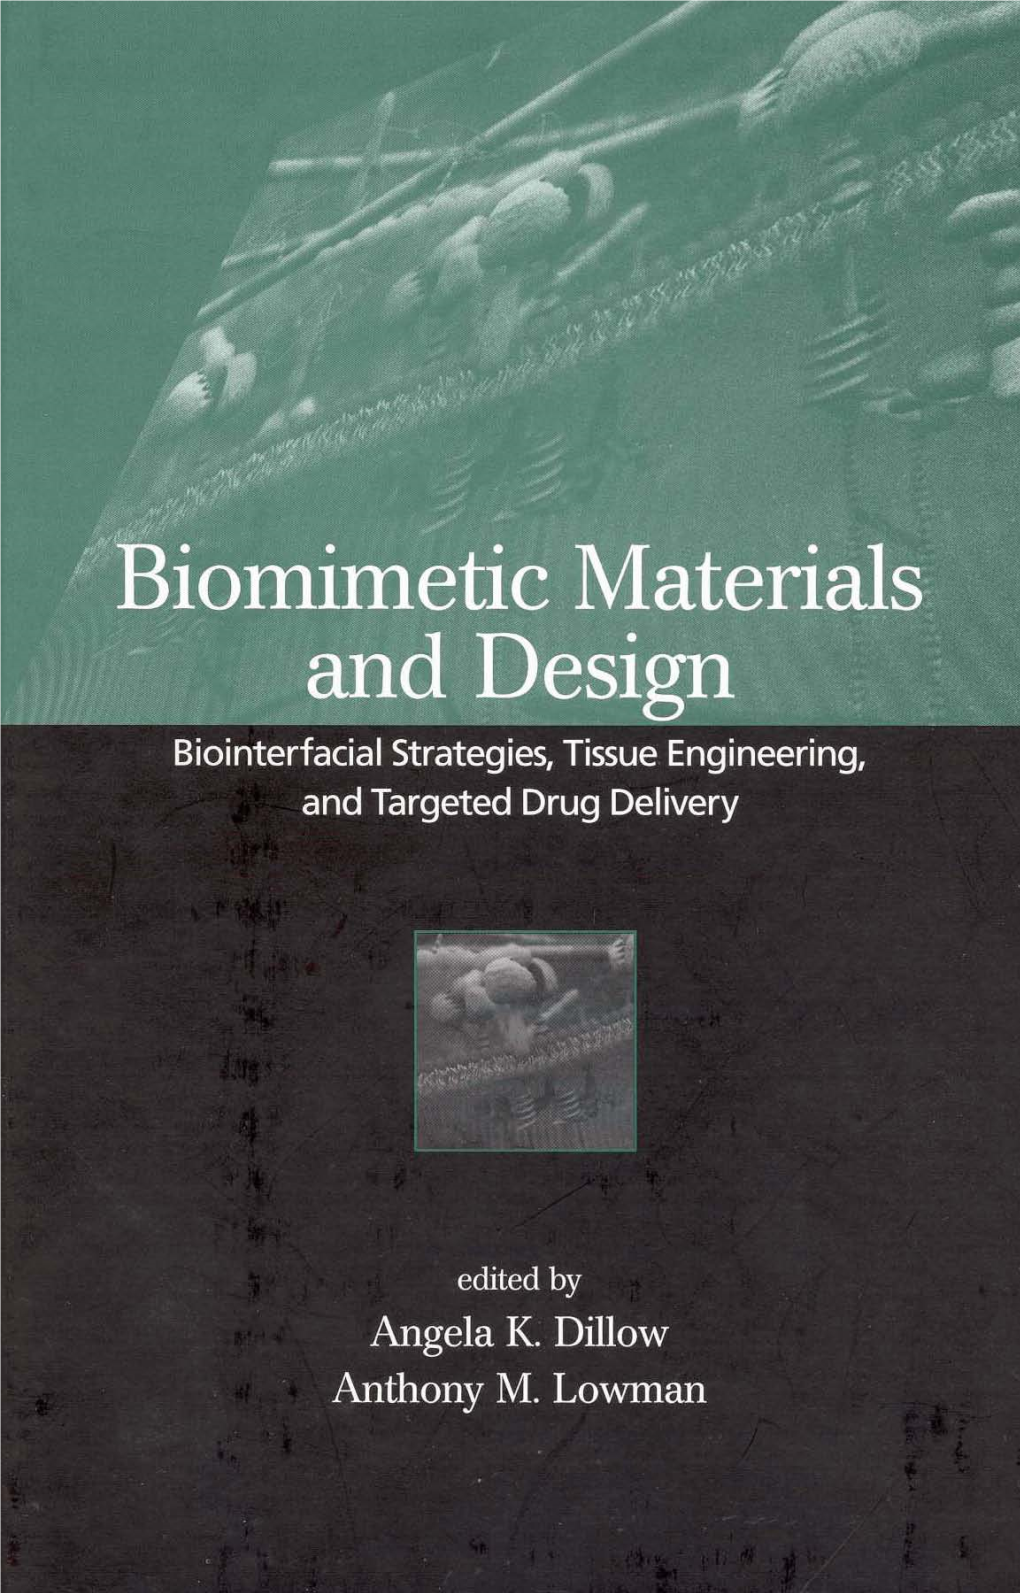 Angela K. Dillow Anthony M. Lowman Biomimetic Materia and Design Biointerfacial Strategies